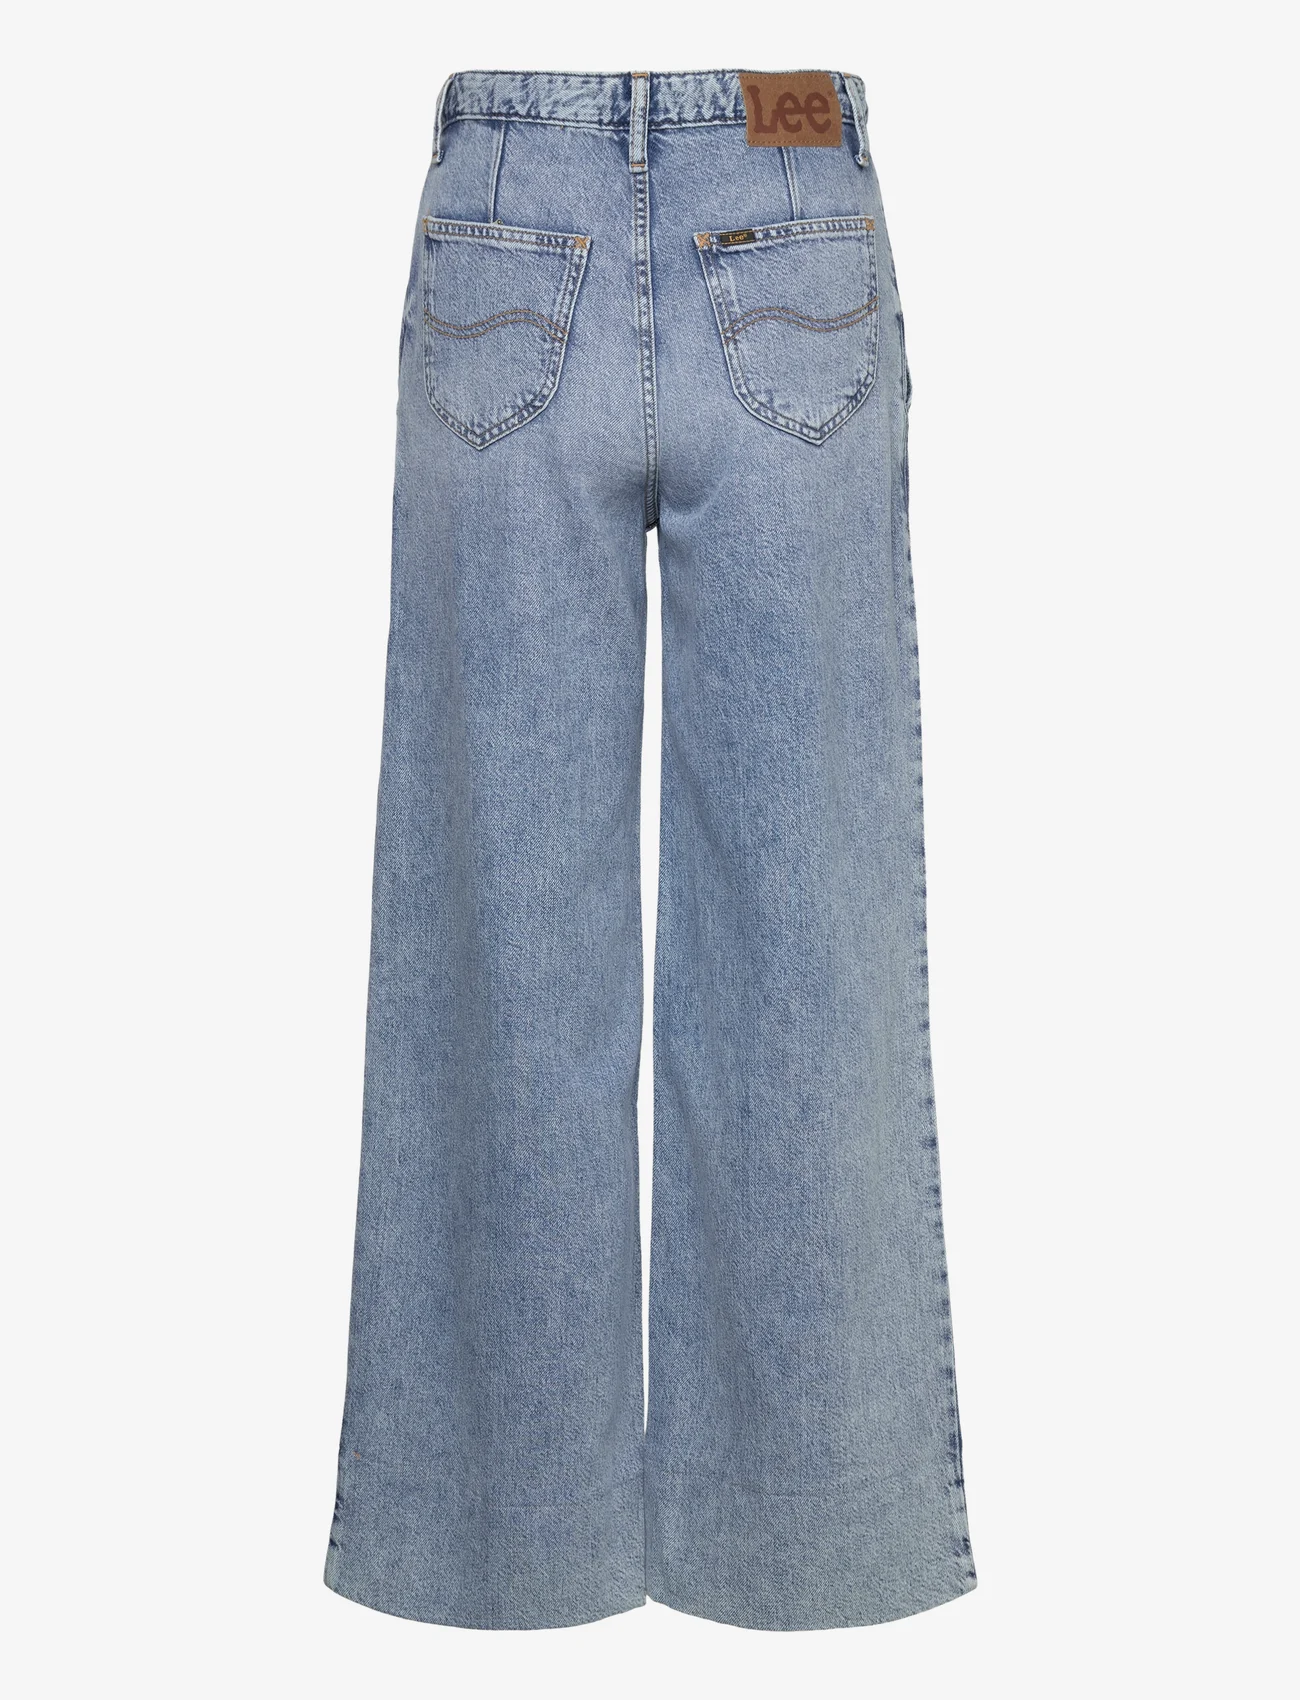 Lee Jeans - UTILITY STELLA A LINE - wide leg jeans - mid lows - 1